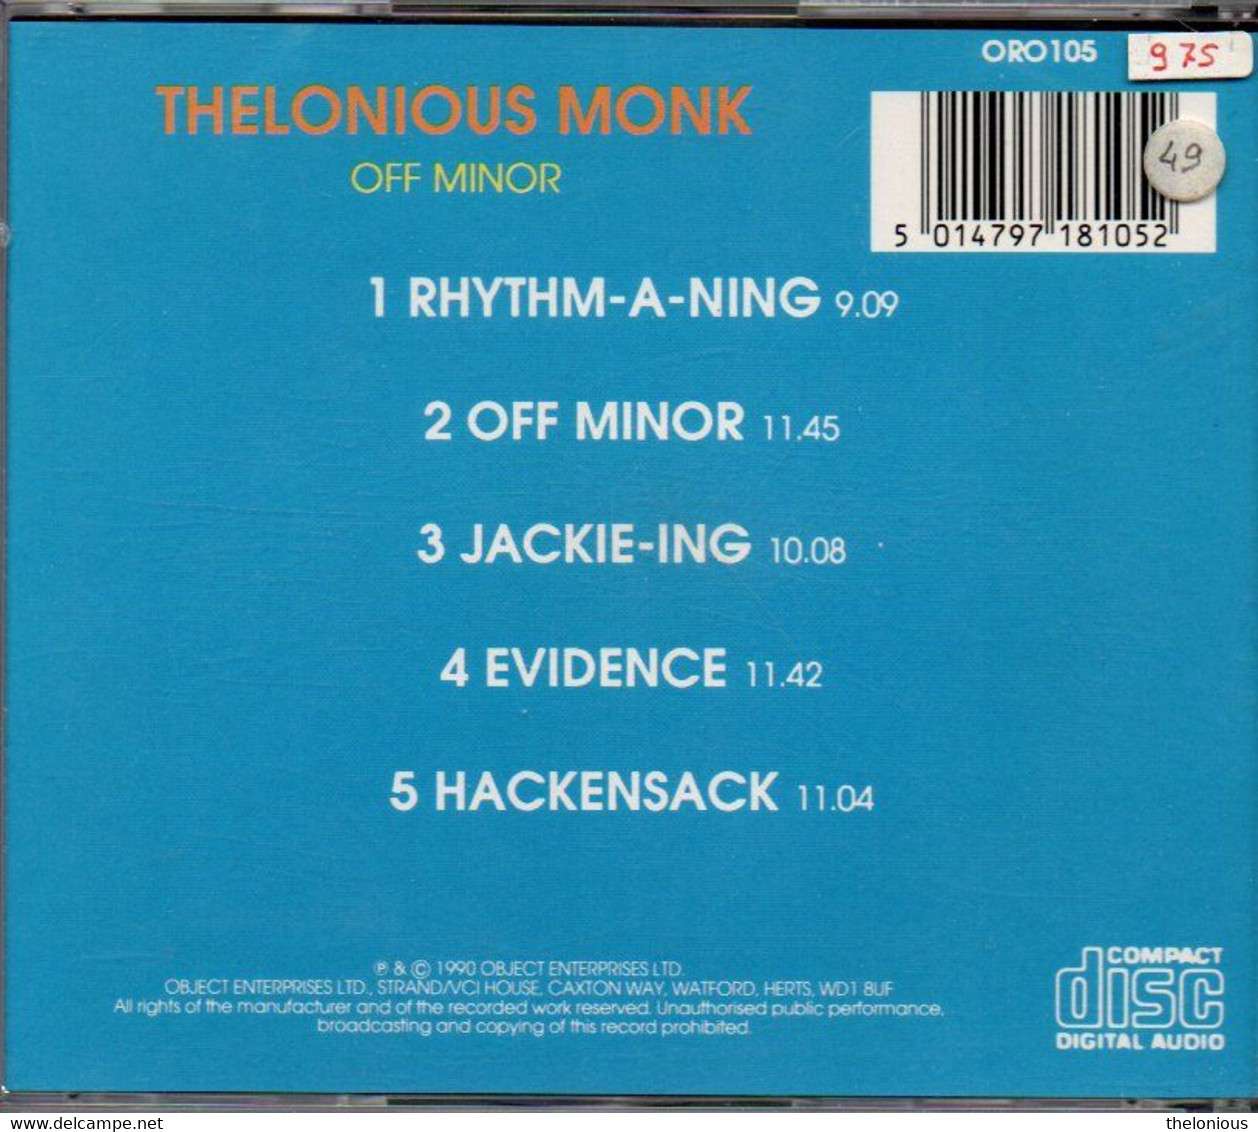 # CD: Thelonious Monk - Off Minor - Jazz Collection ORO 105 - Jazz